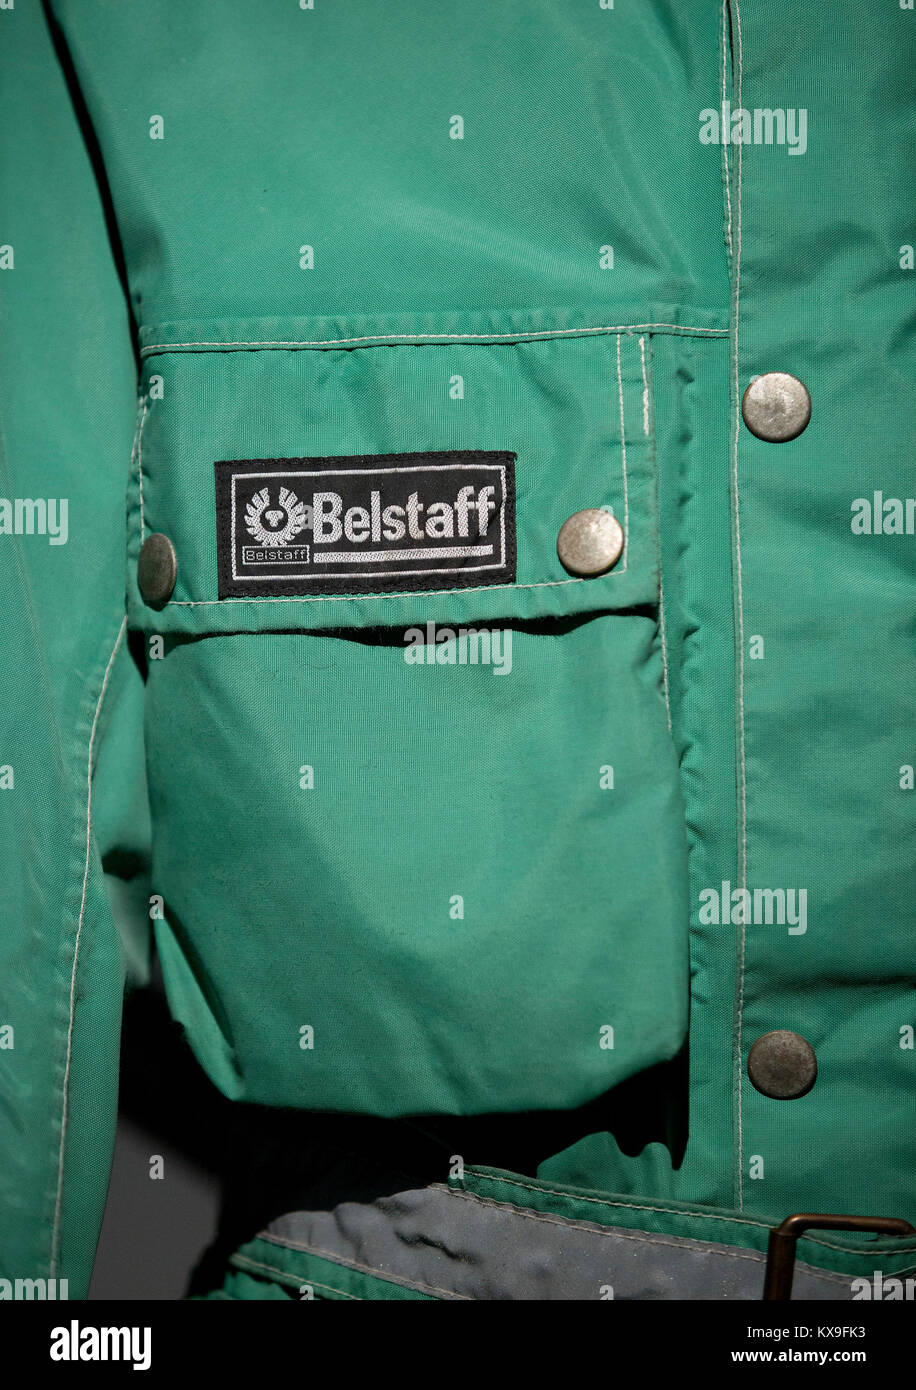 Belstaff Jacket Fotos e Imágenes de stock - Alamy